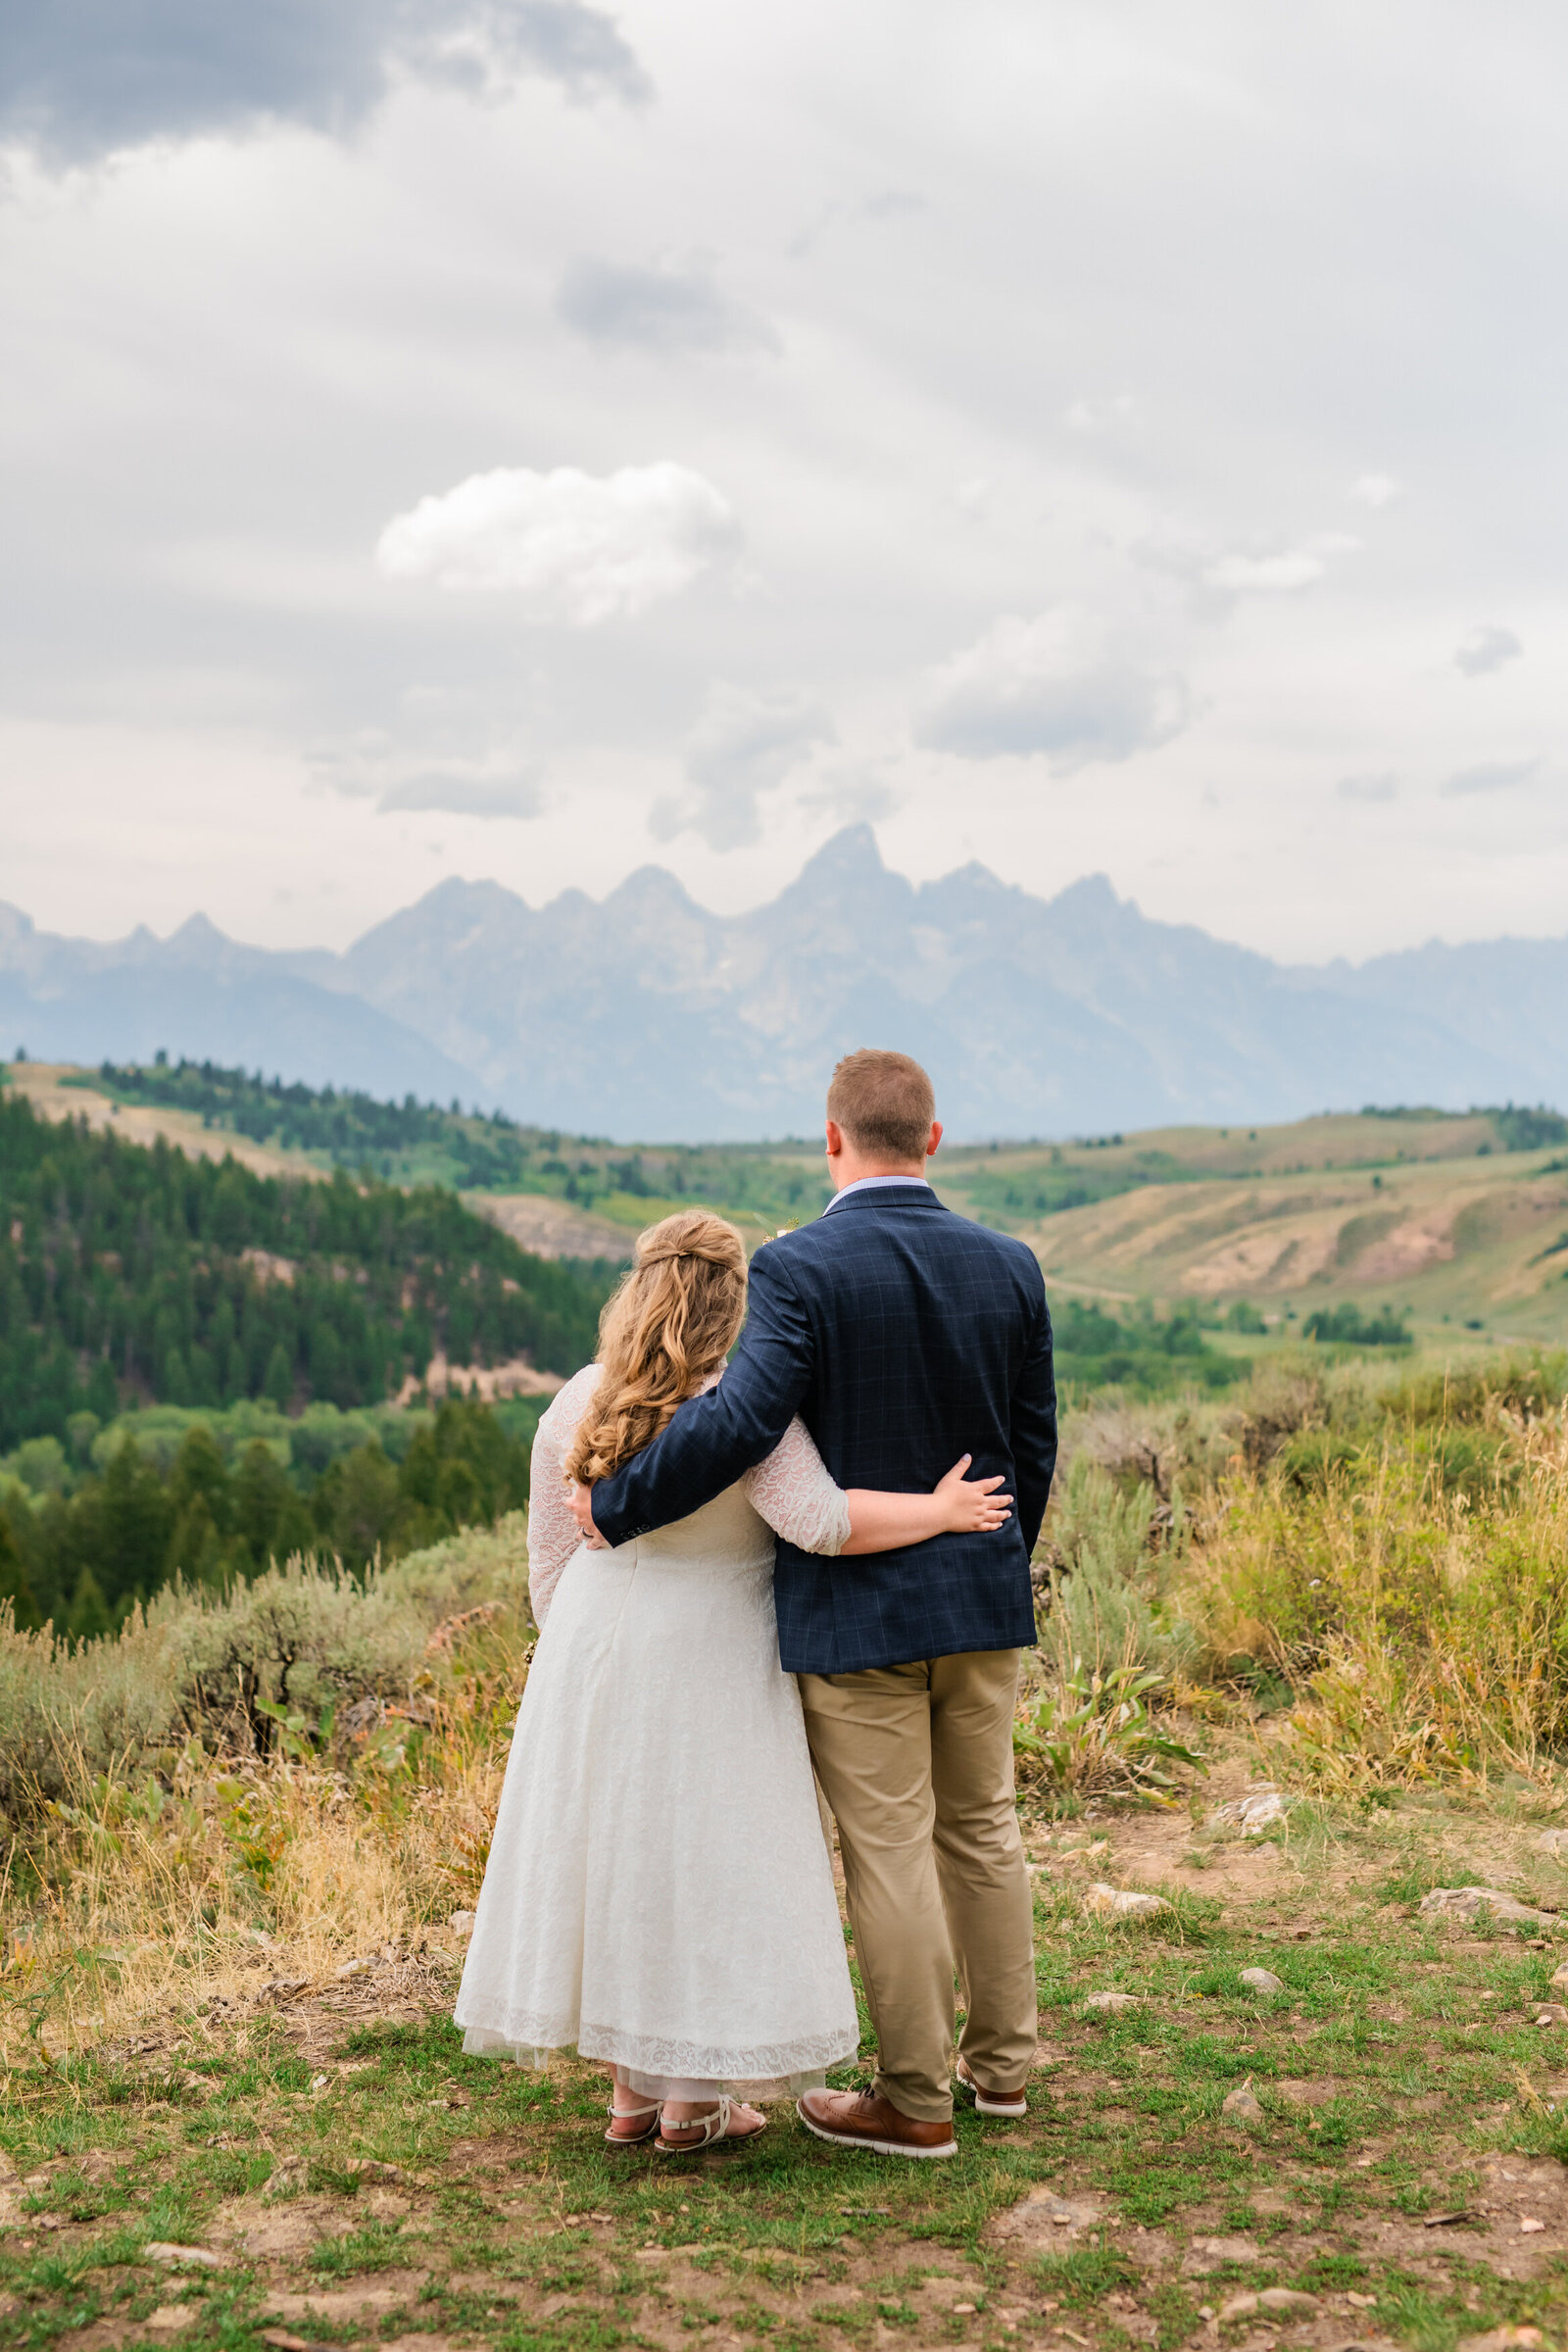 Jackson Hole videographer captures bride and groom hugging after Grand Teton elopement